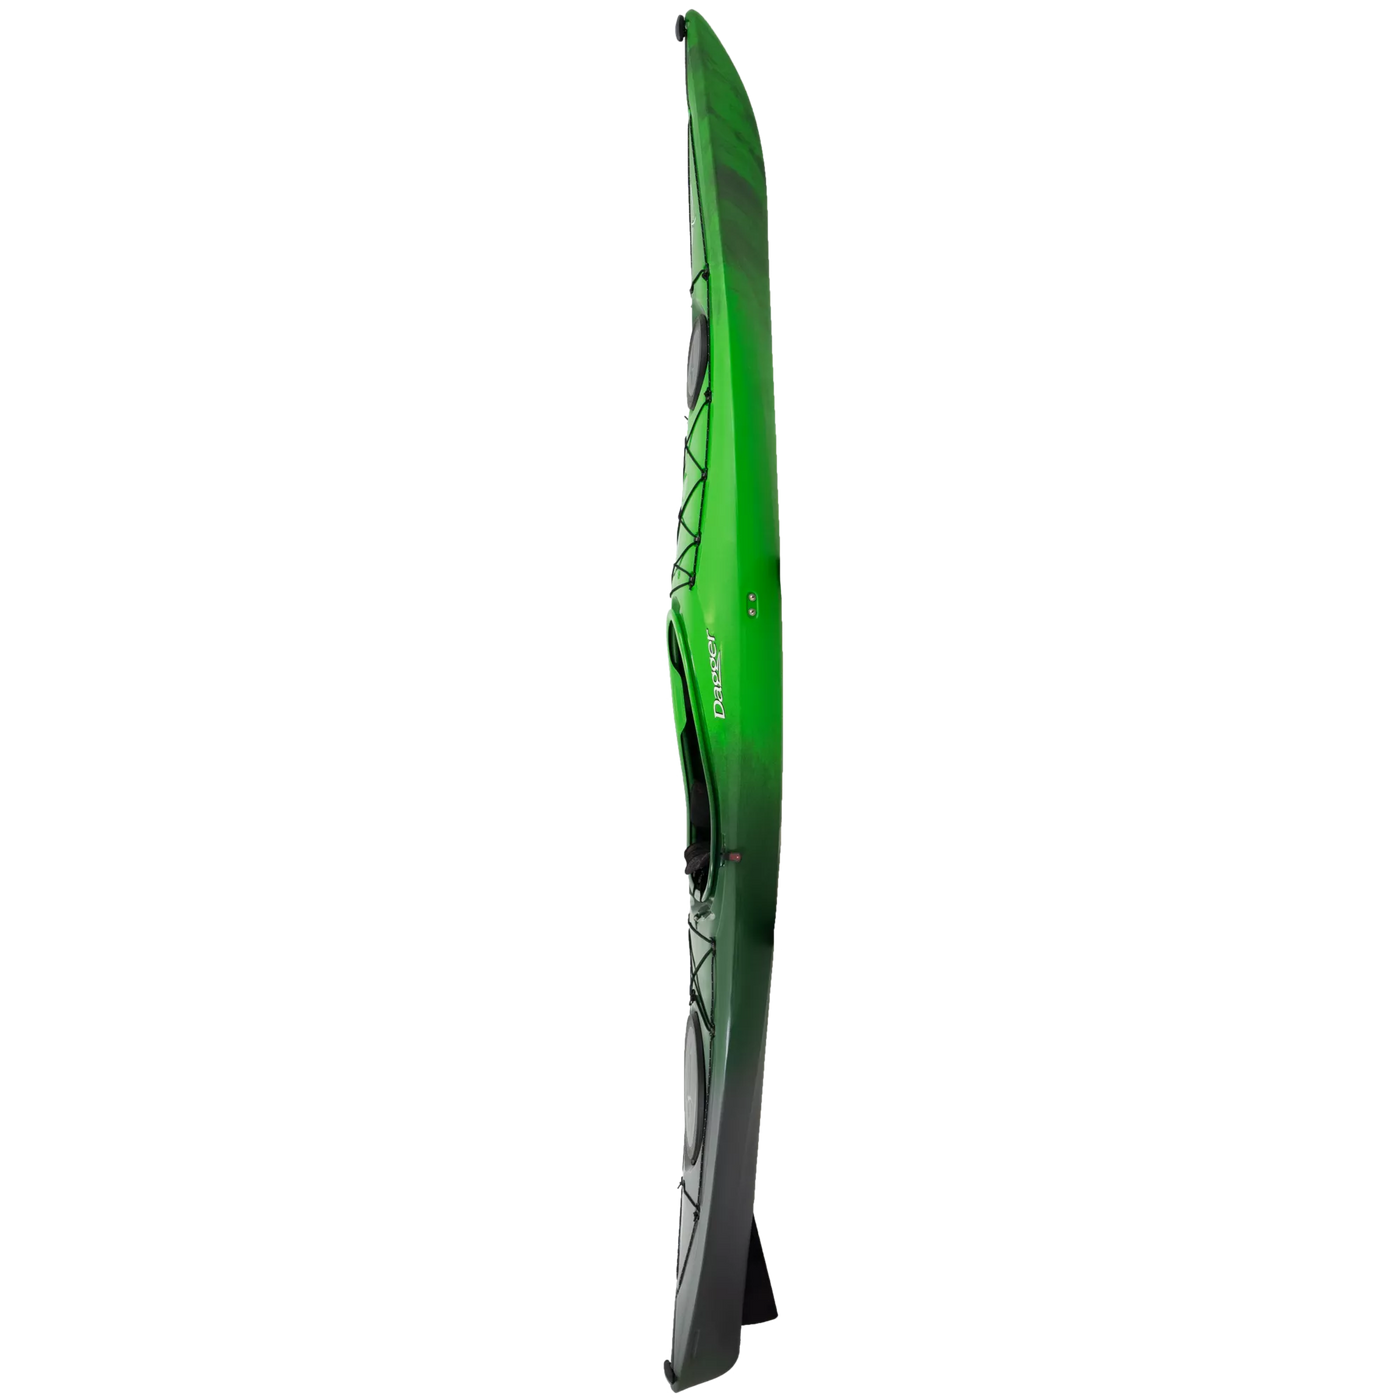 dagger stratos 12.5s green side